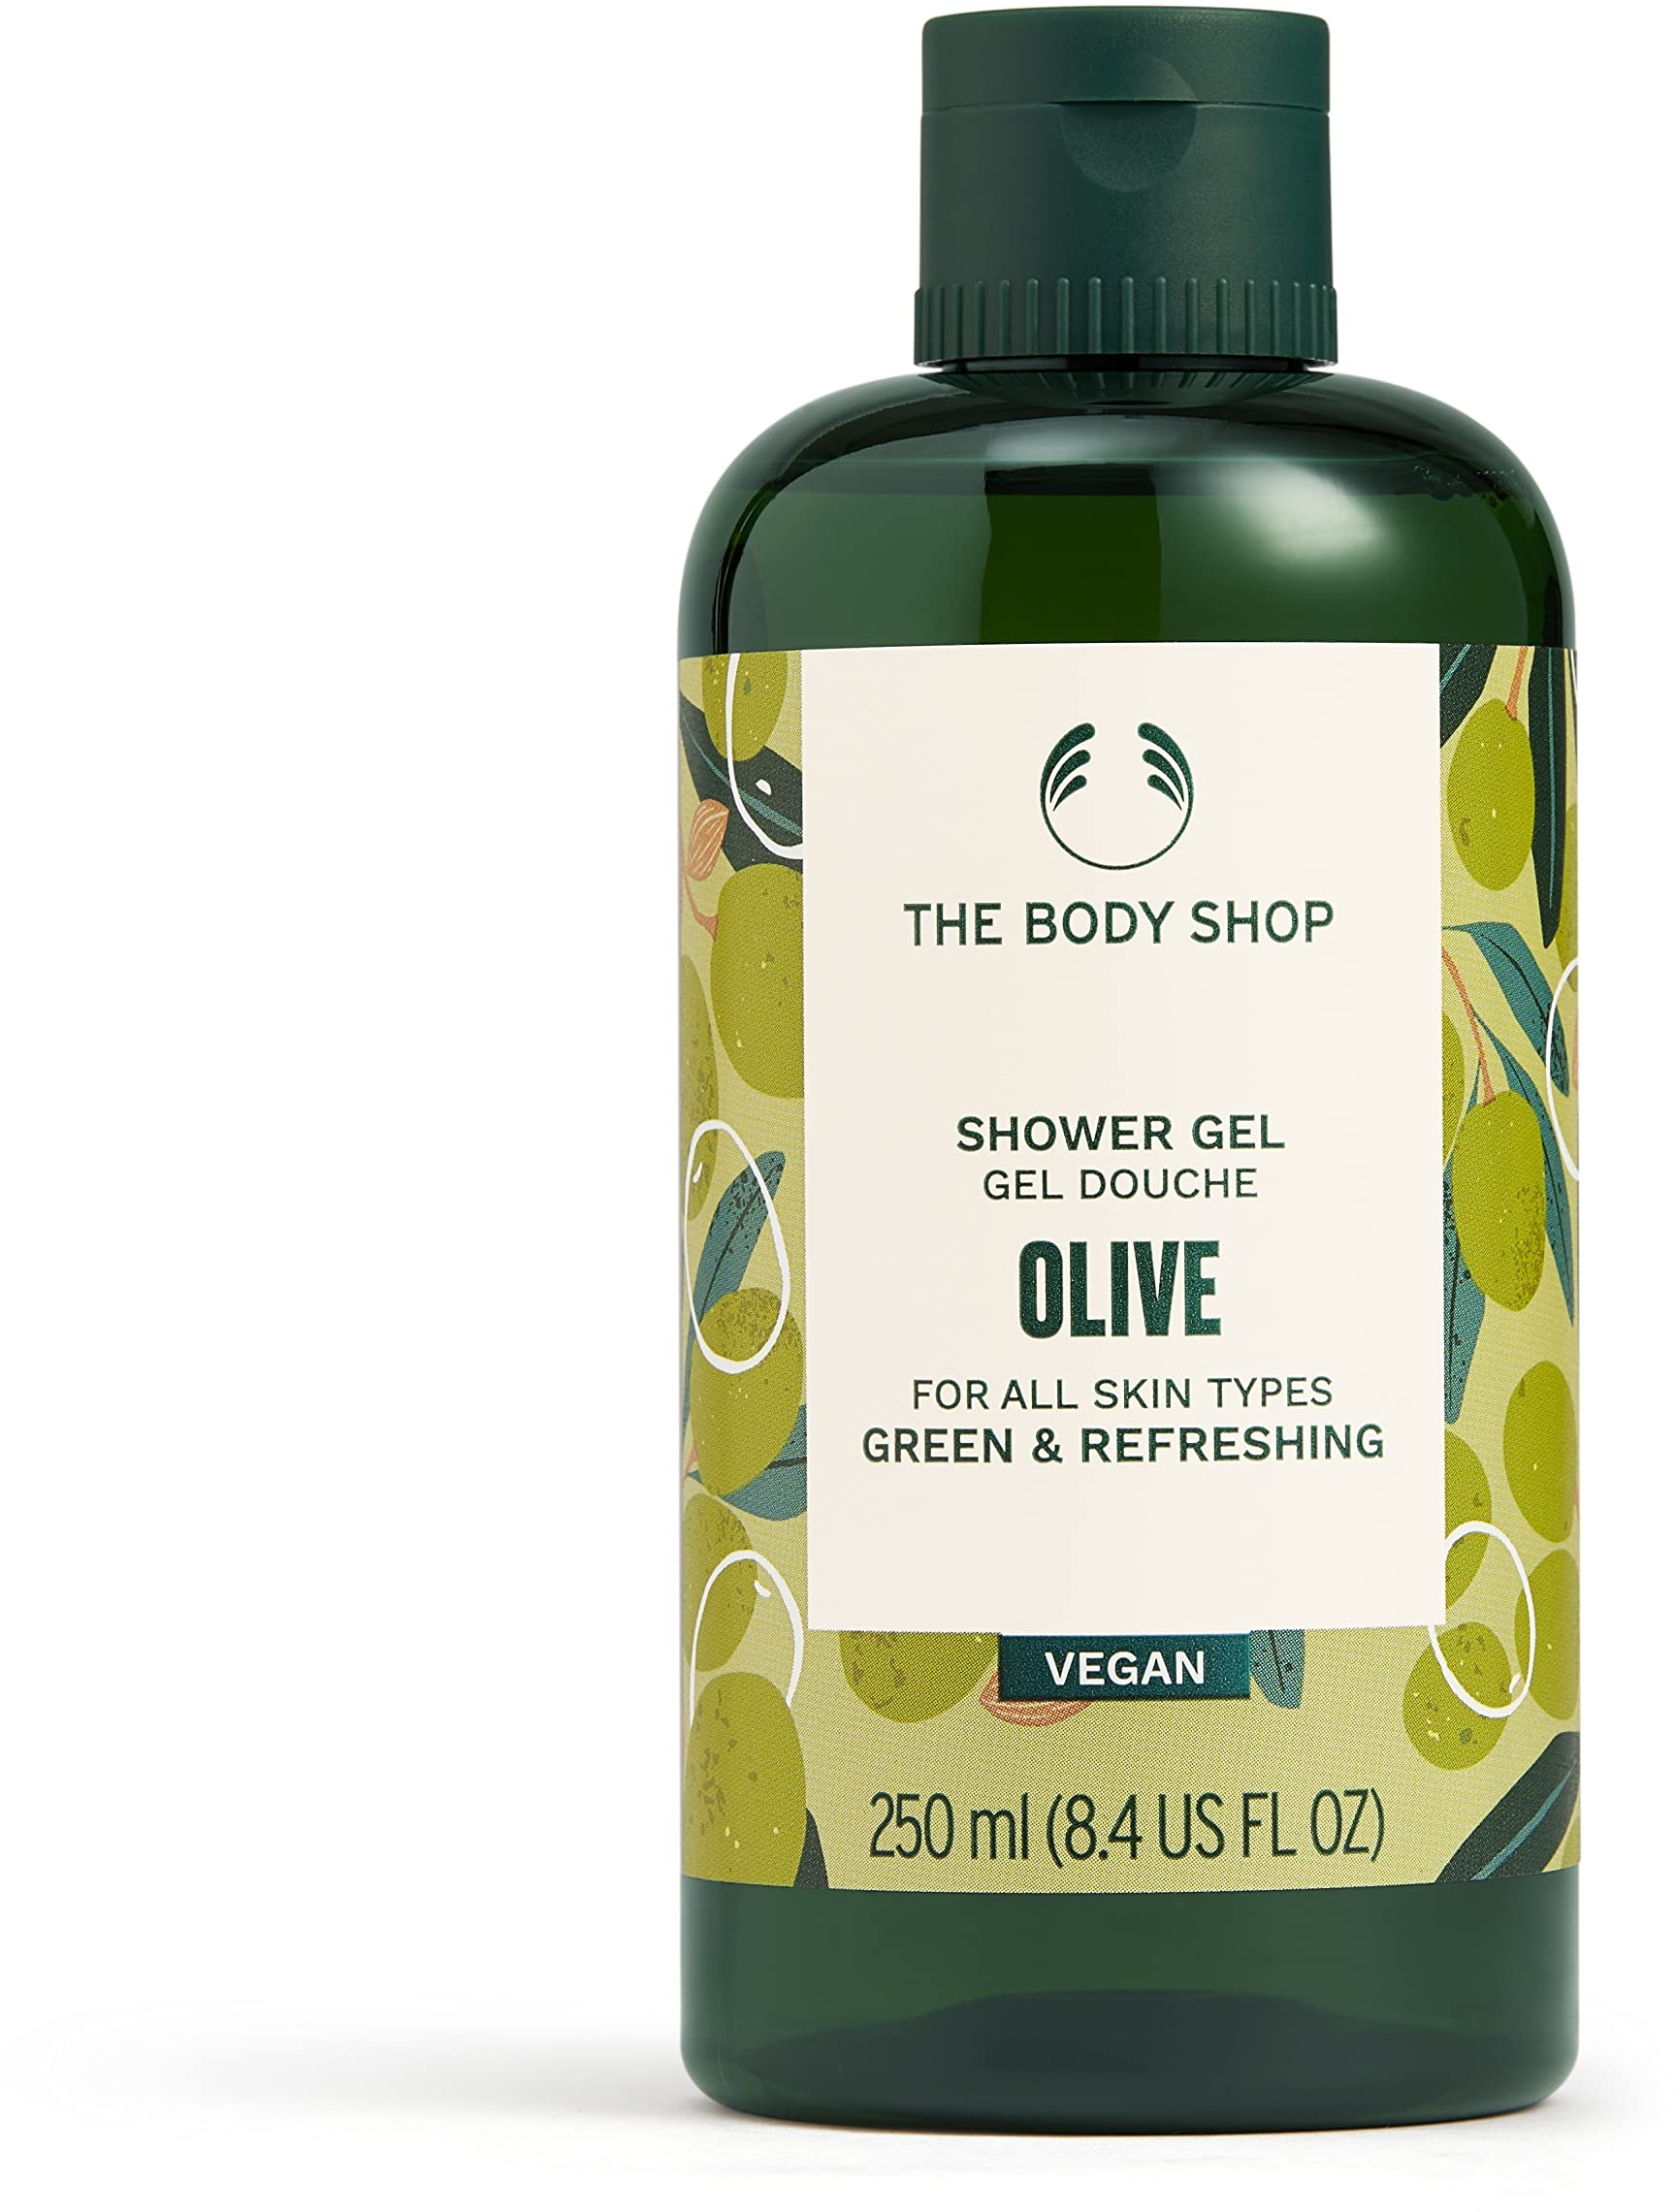 The Body Shop Olive Shower Gel unisex, Olive Duschgel 250 ml, 1er Pack (1 x 250 ml)